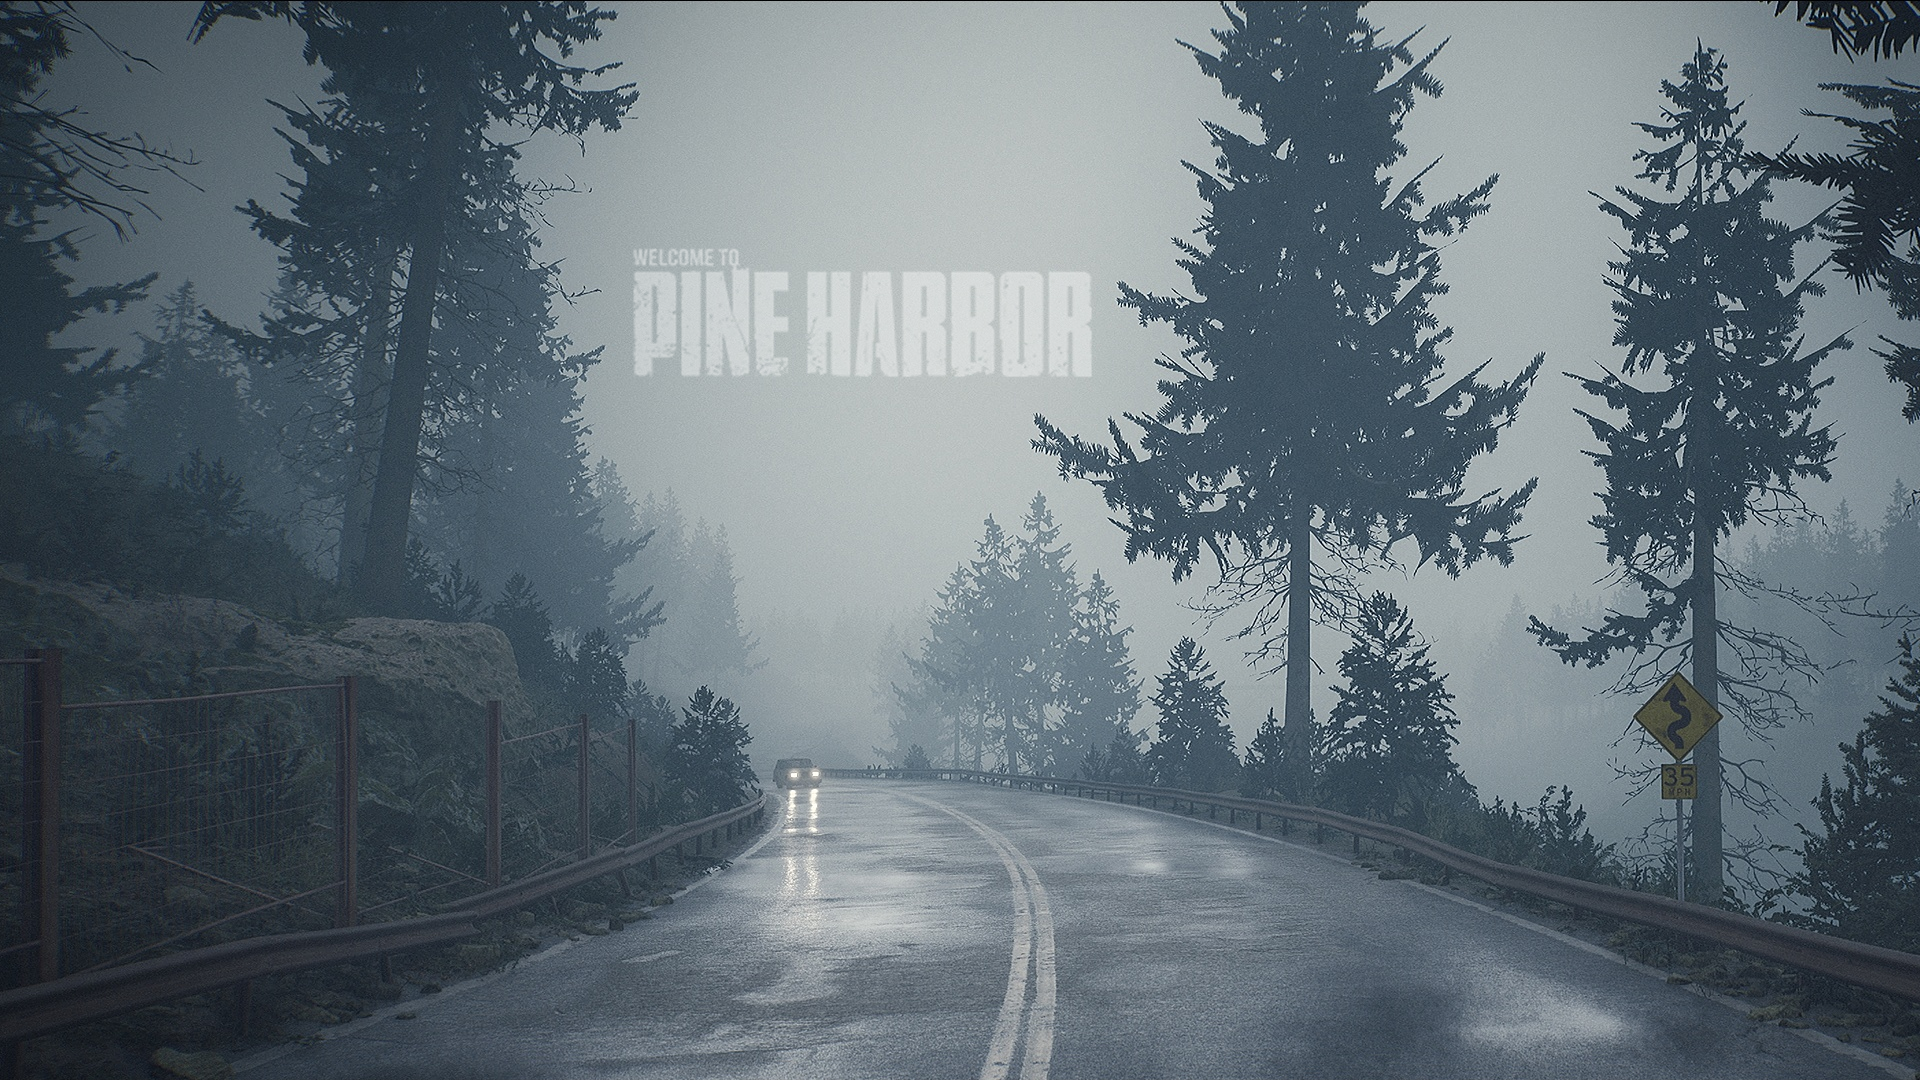 [Vtuber] Pine Harbor | Прохождение (1)